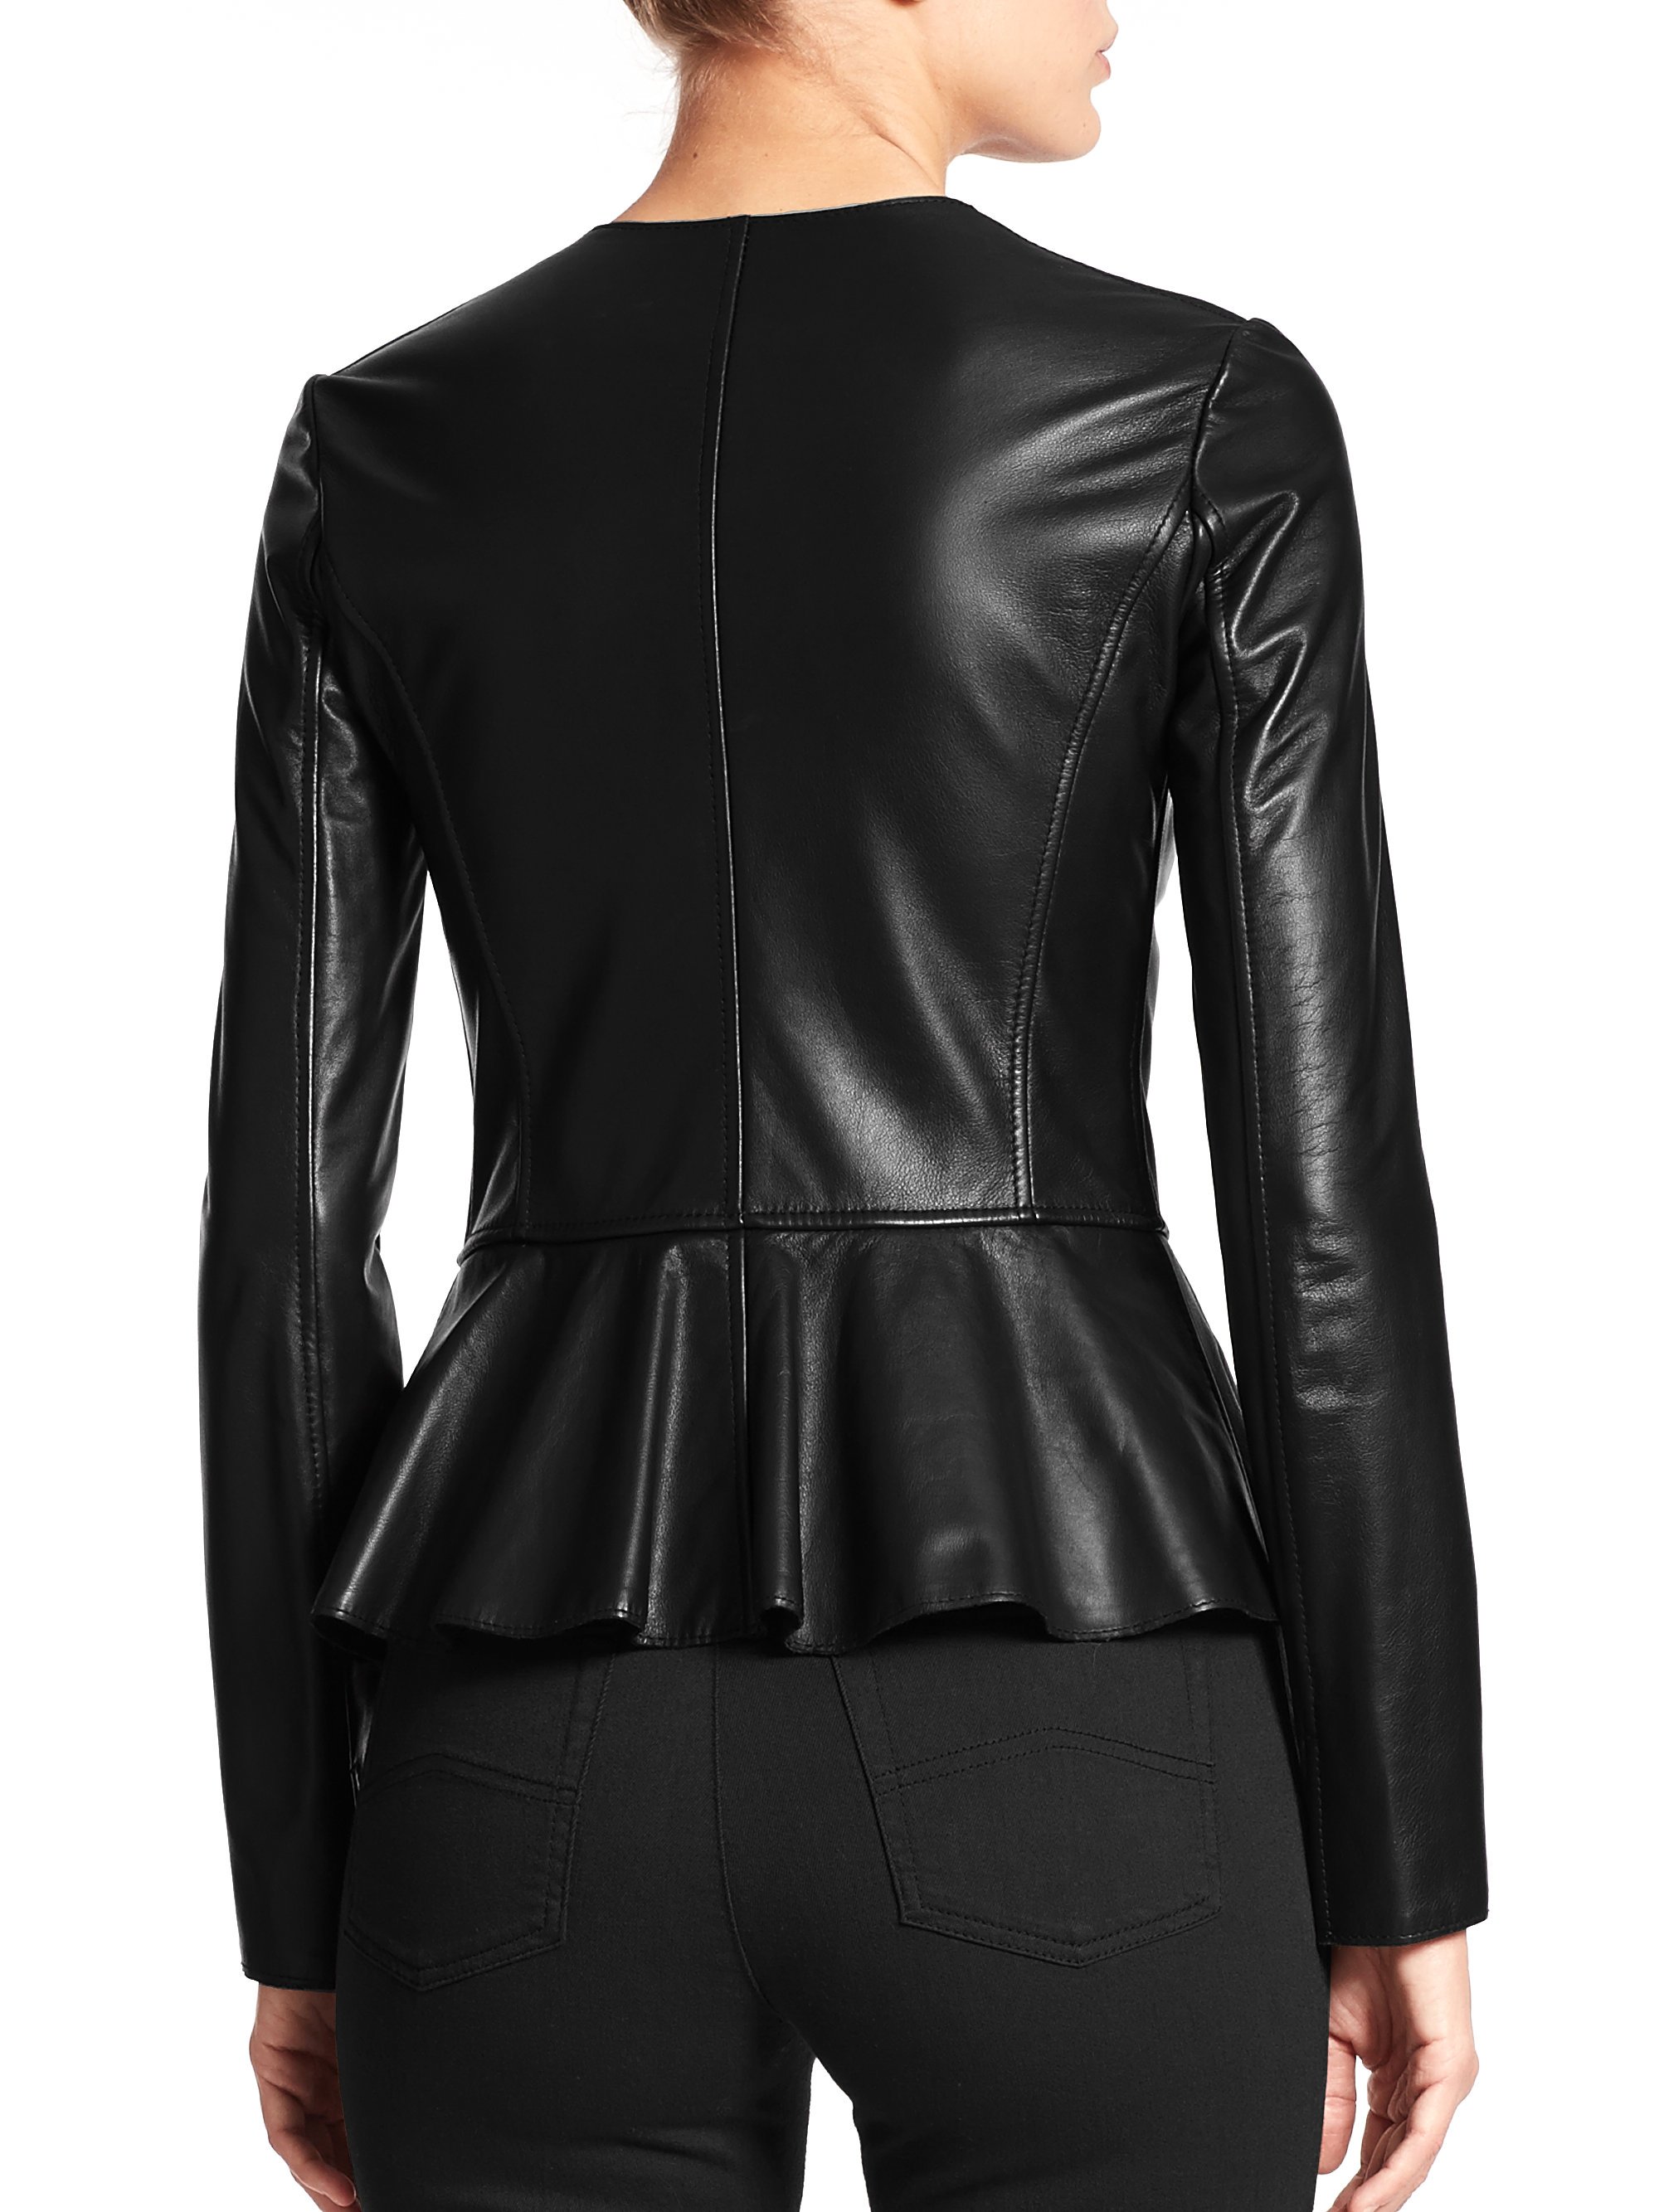 Armani Leather Peplum Jacket in Black - Lyst